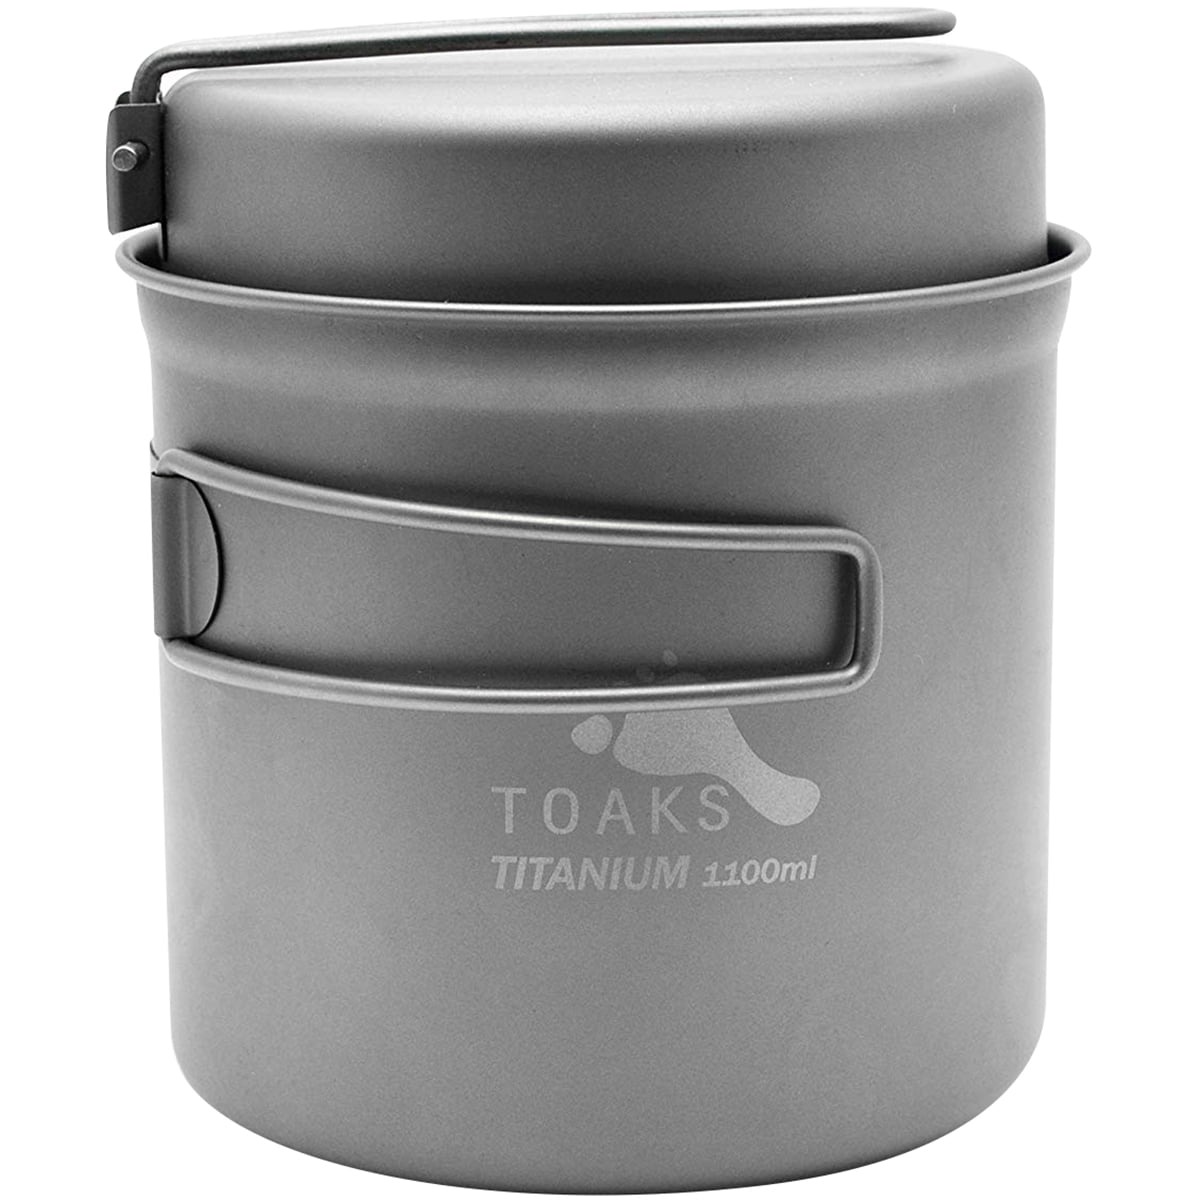 750 ml TOAKS Titanium Pot Tazza portatile in titanio ultra leggera